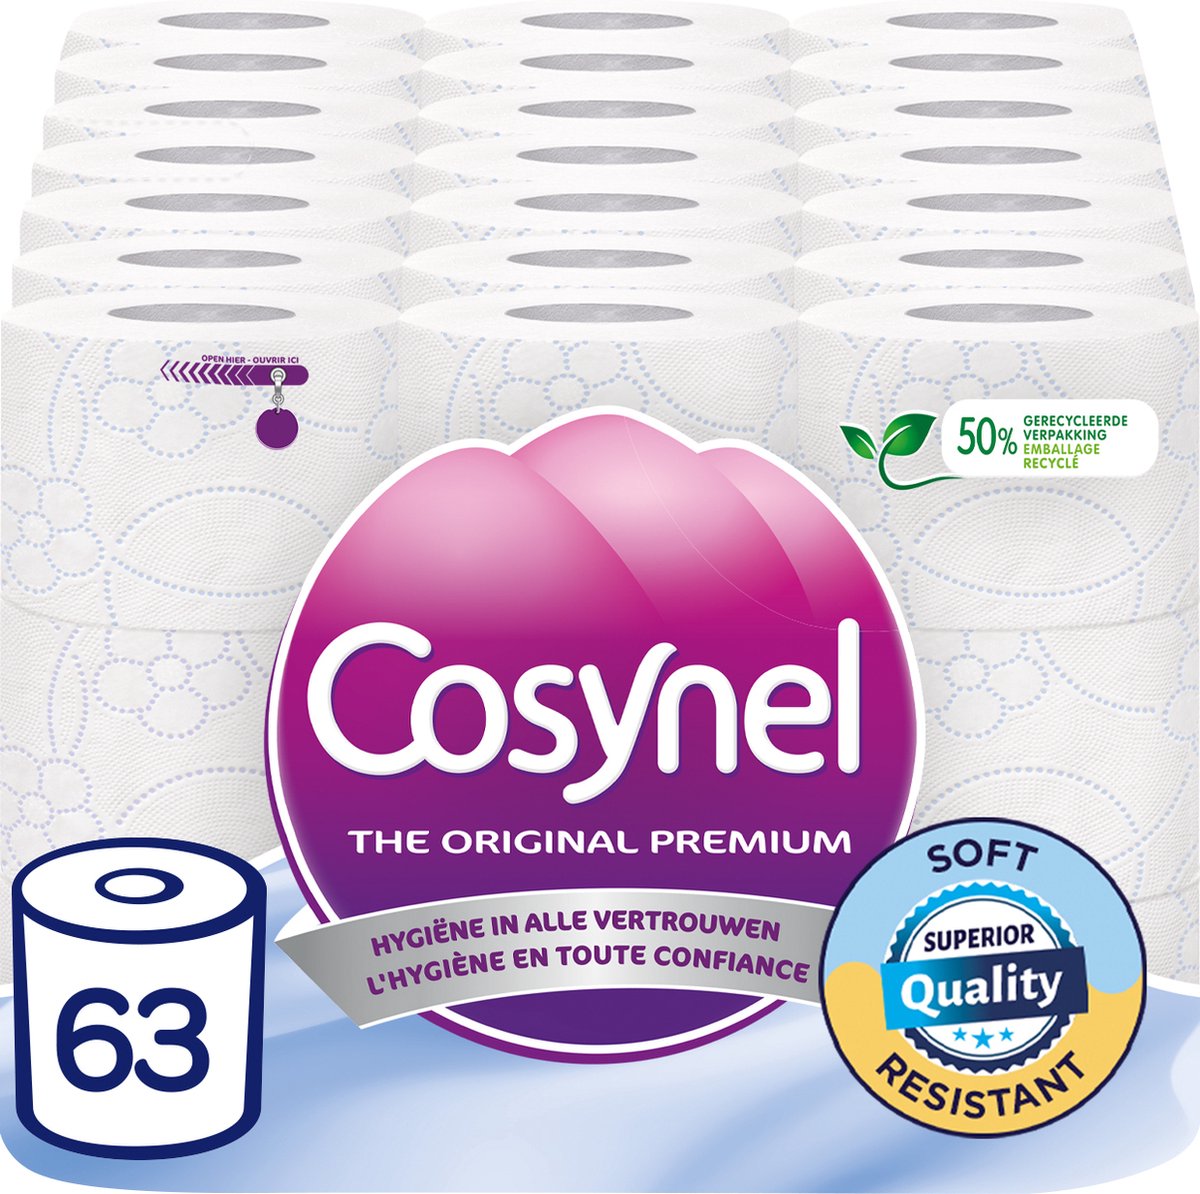 Cosynel Blauw Toiletpapier review